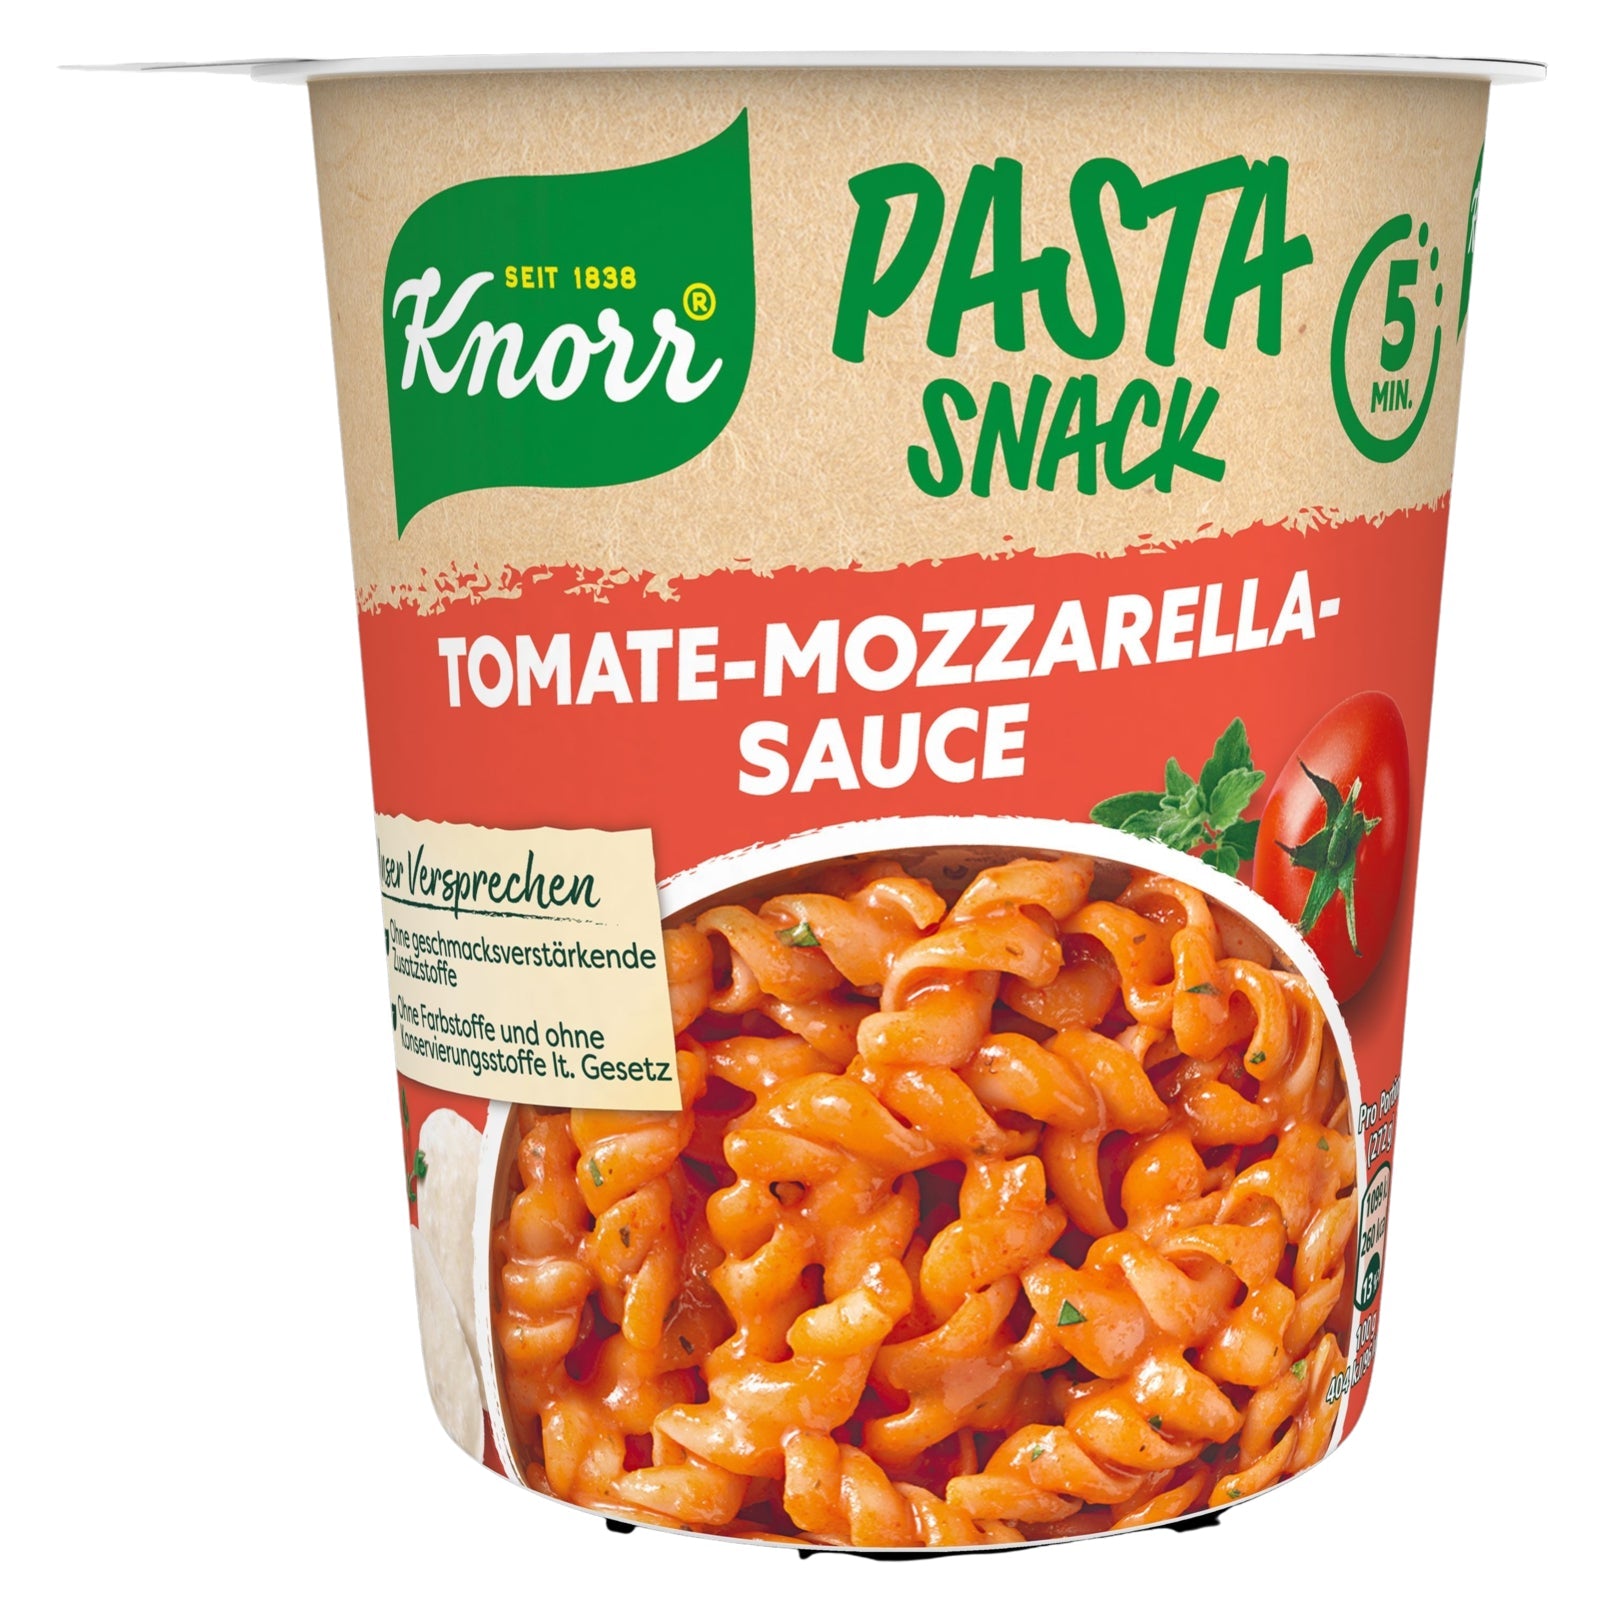 Pasta Snack-Becher Tomate-Mozzarella-Sauce 72g